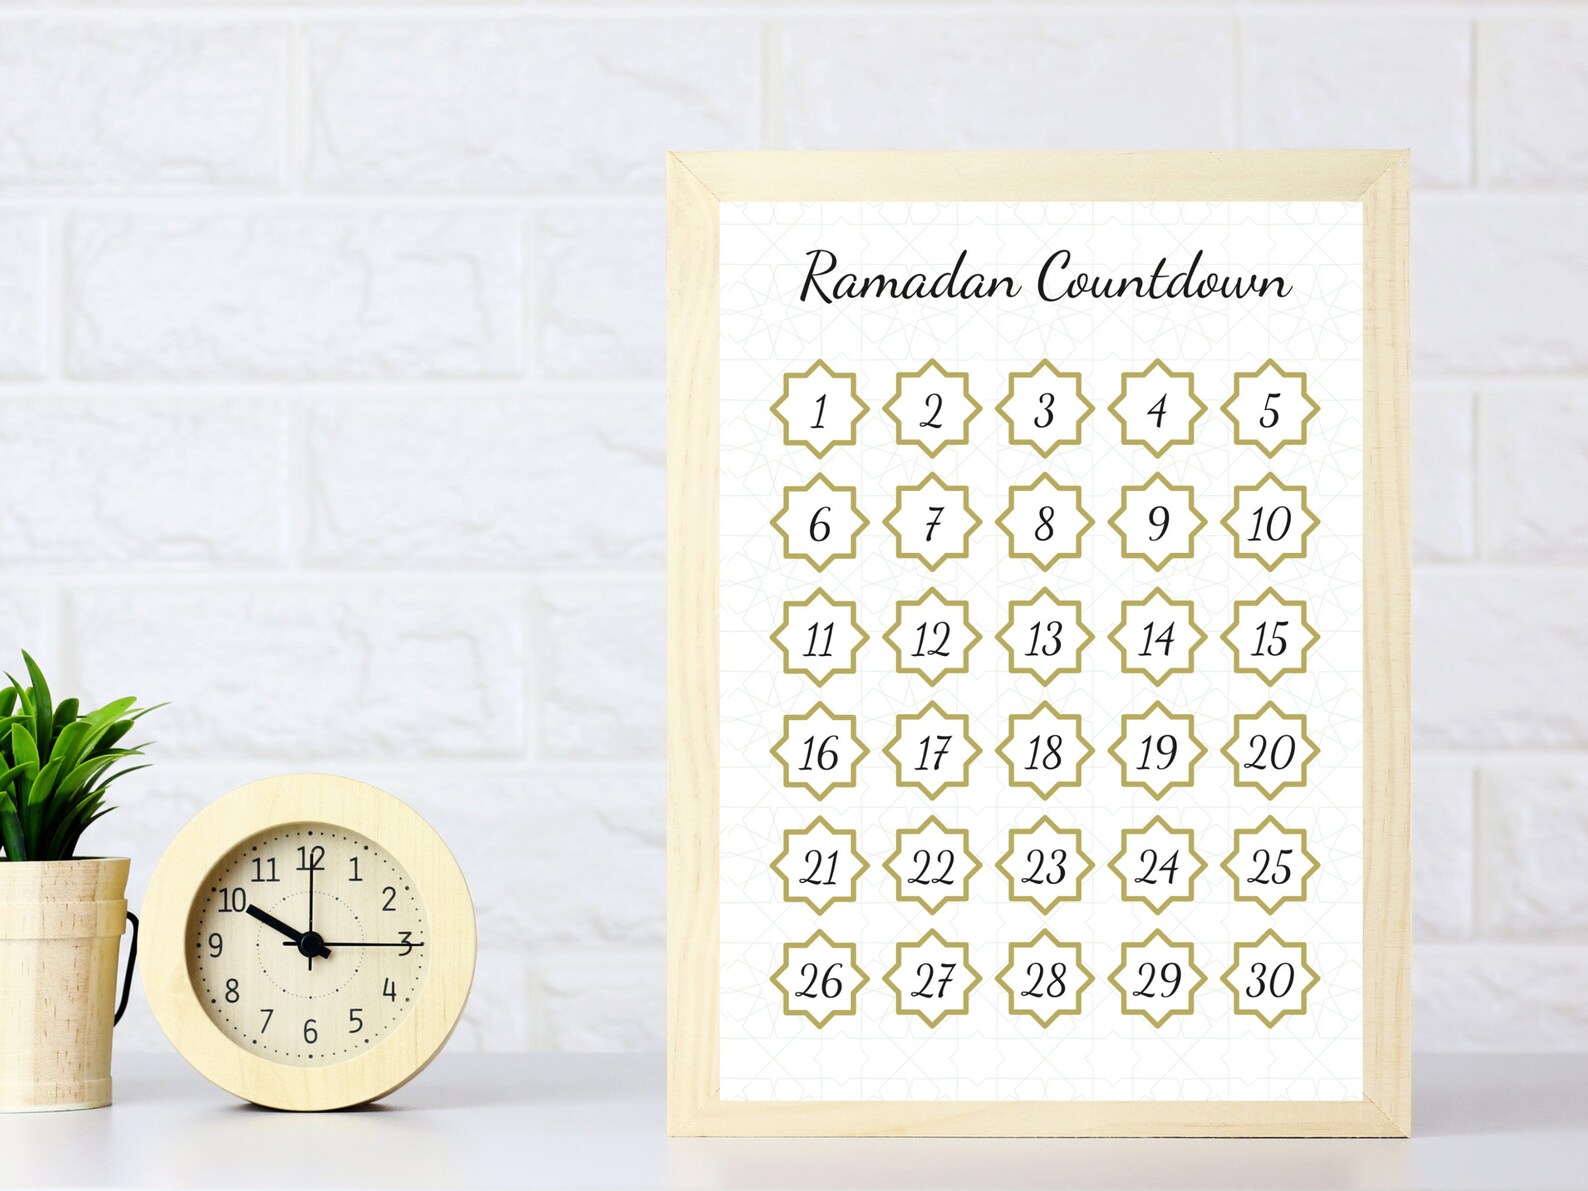 Ramadan Countdown Calendar Iftaar and Suhoor Timetable Etsy